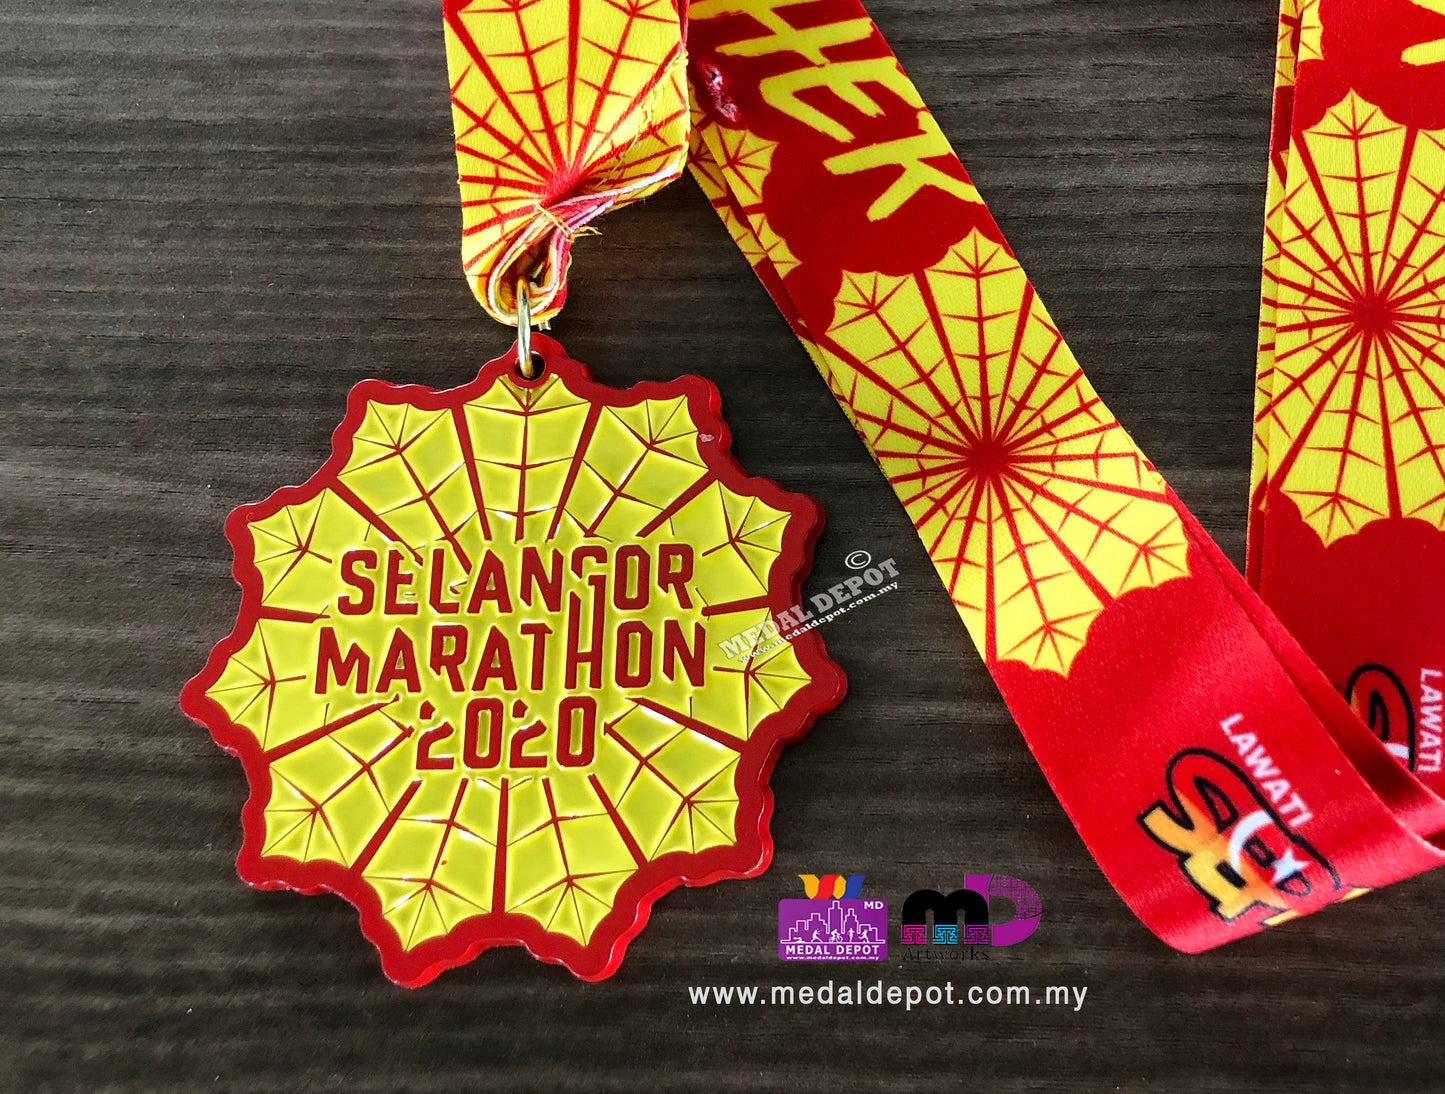 Selangor Marathon 2020